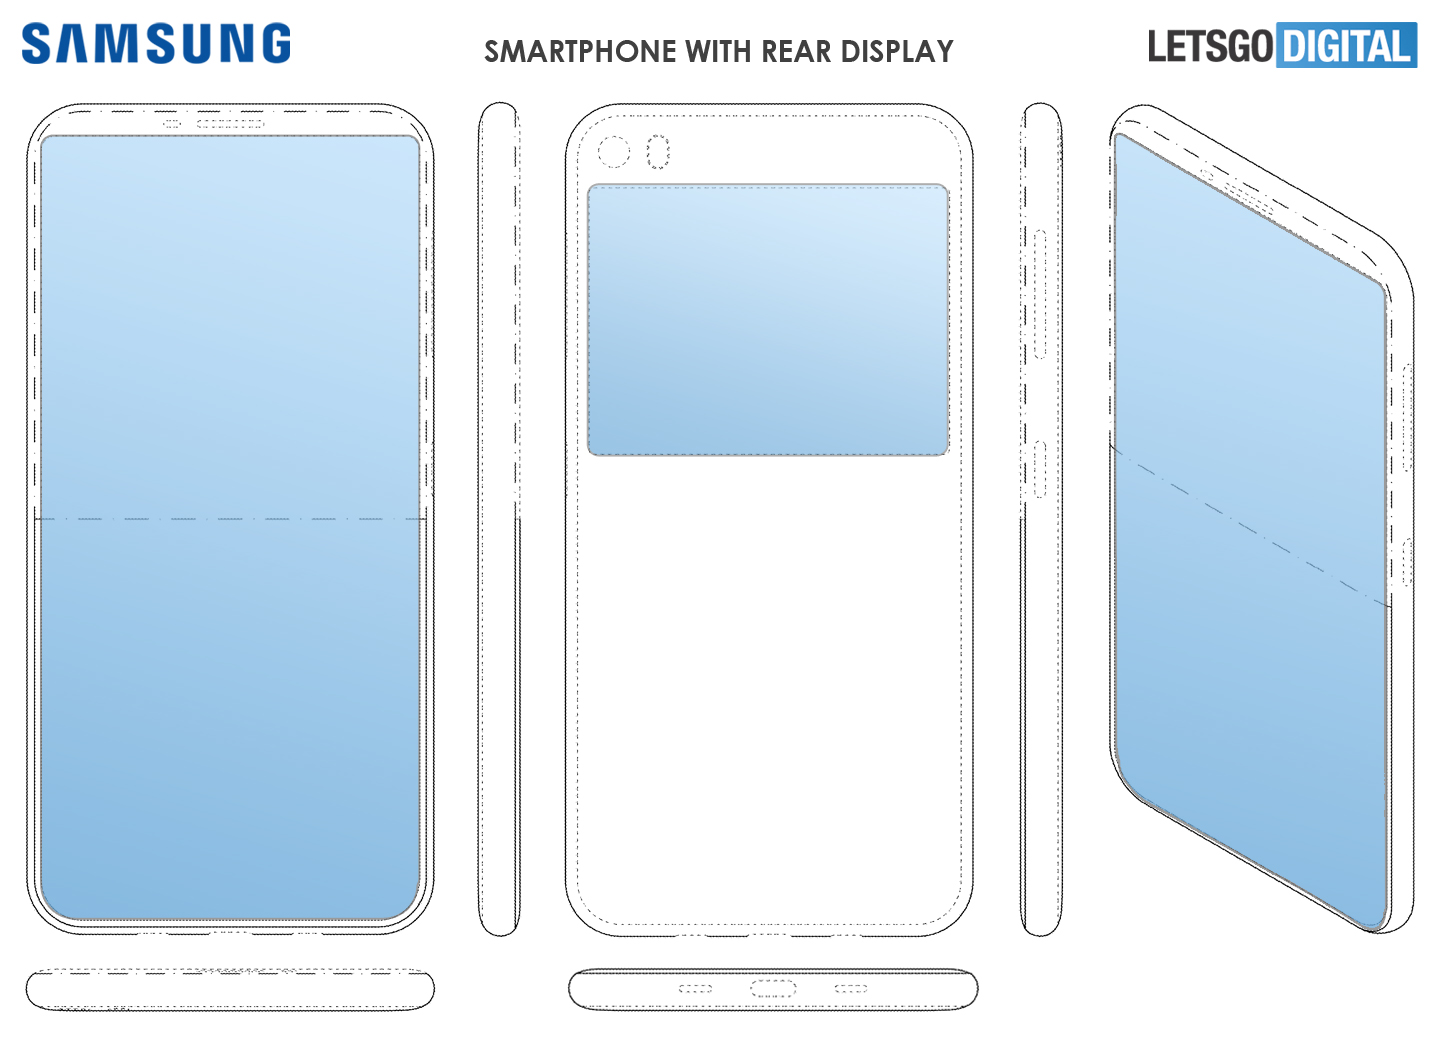 Samsung Dual Display Smartphone Patent